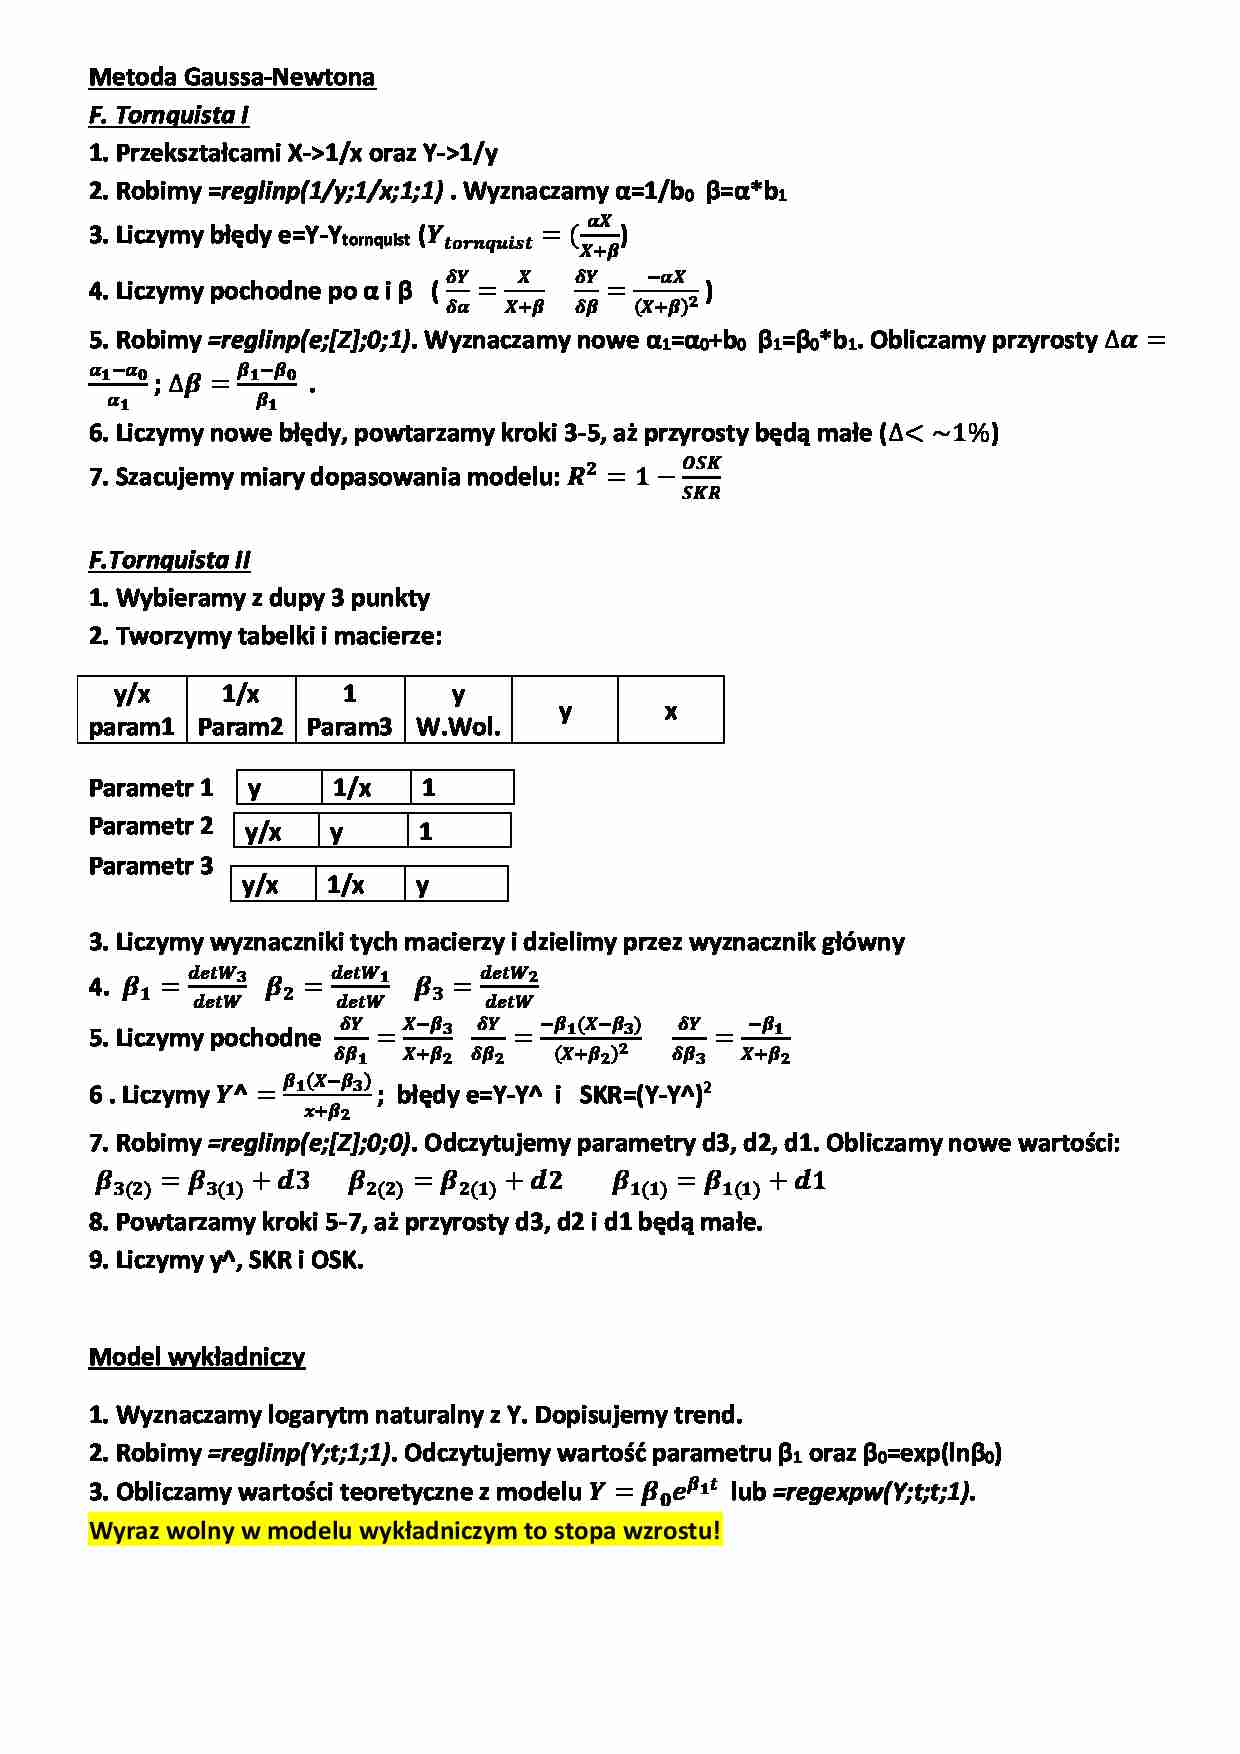  Ekonometria - Metoda Gaussa - strona 1